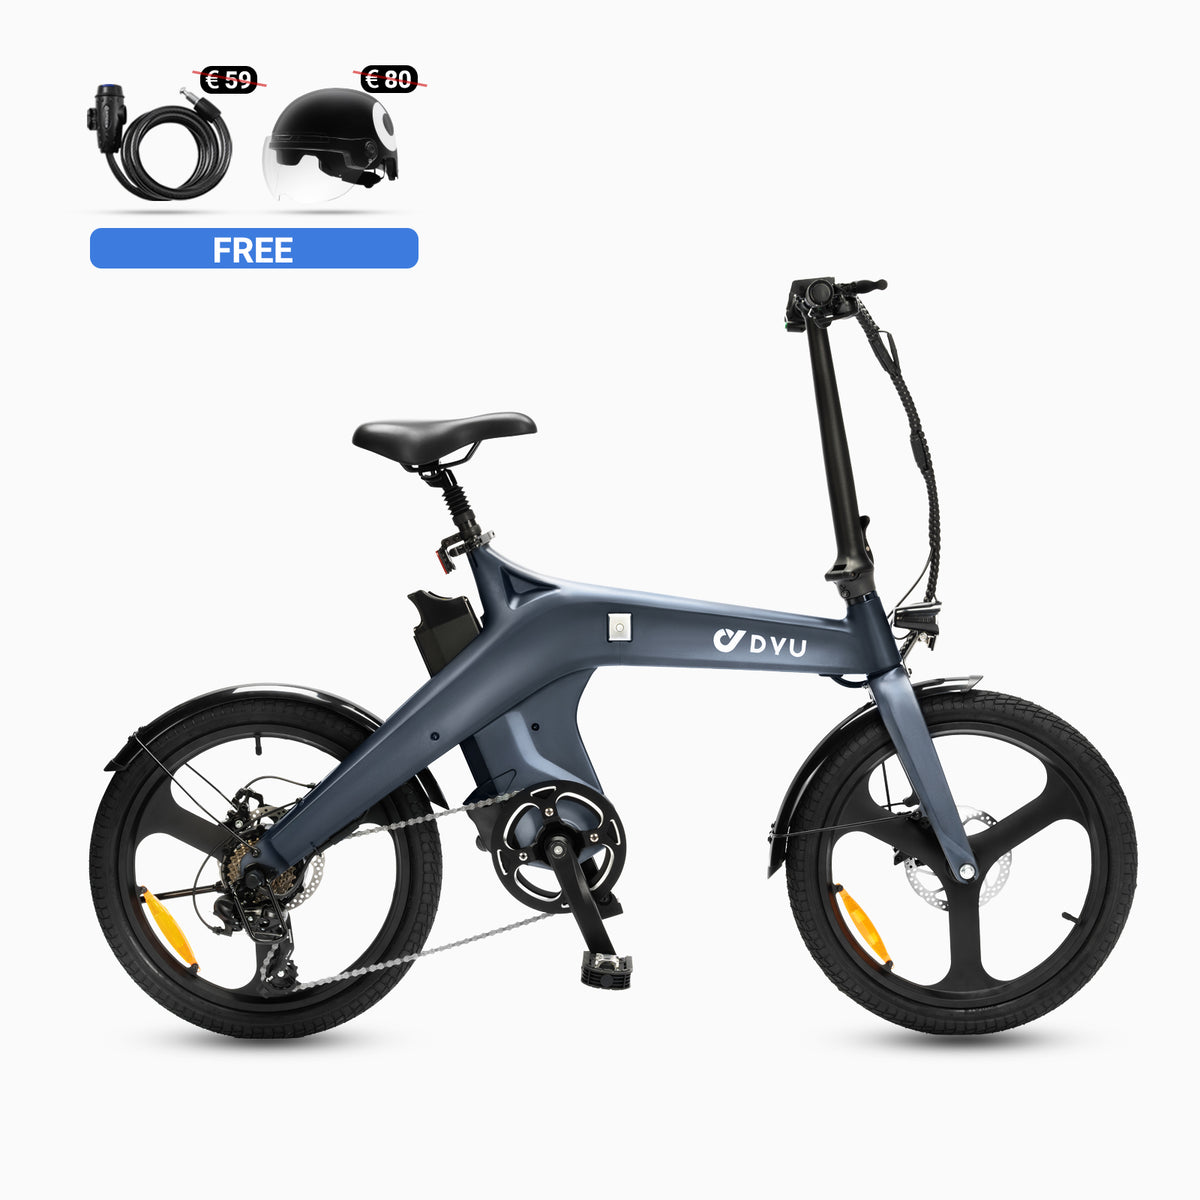 DYU T1 20 Inch Pedal-Assist Torque Sensor Foldable Electric Bike